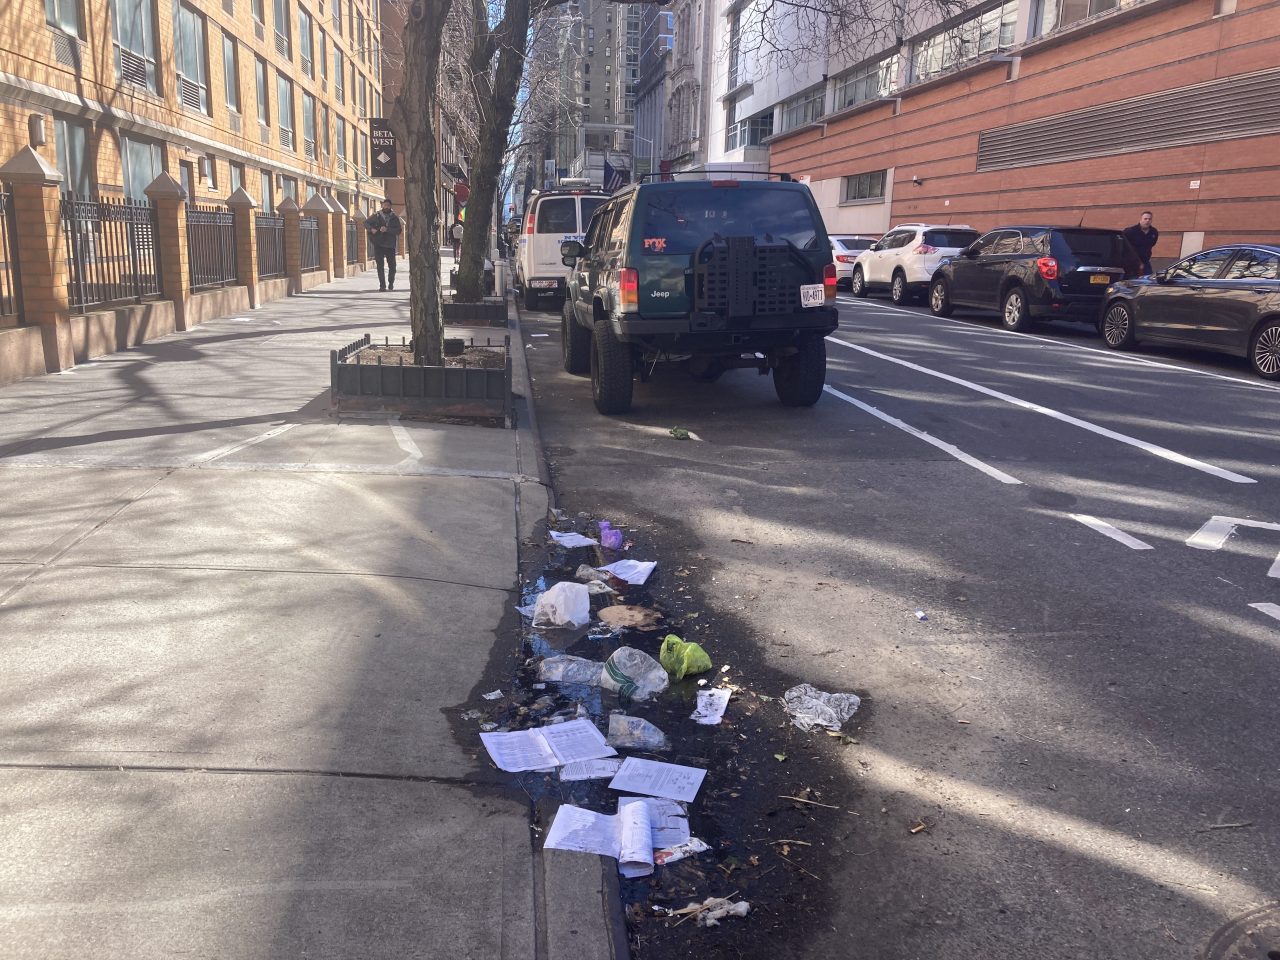 A pile of trash outside the precinct.